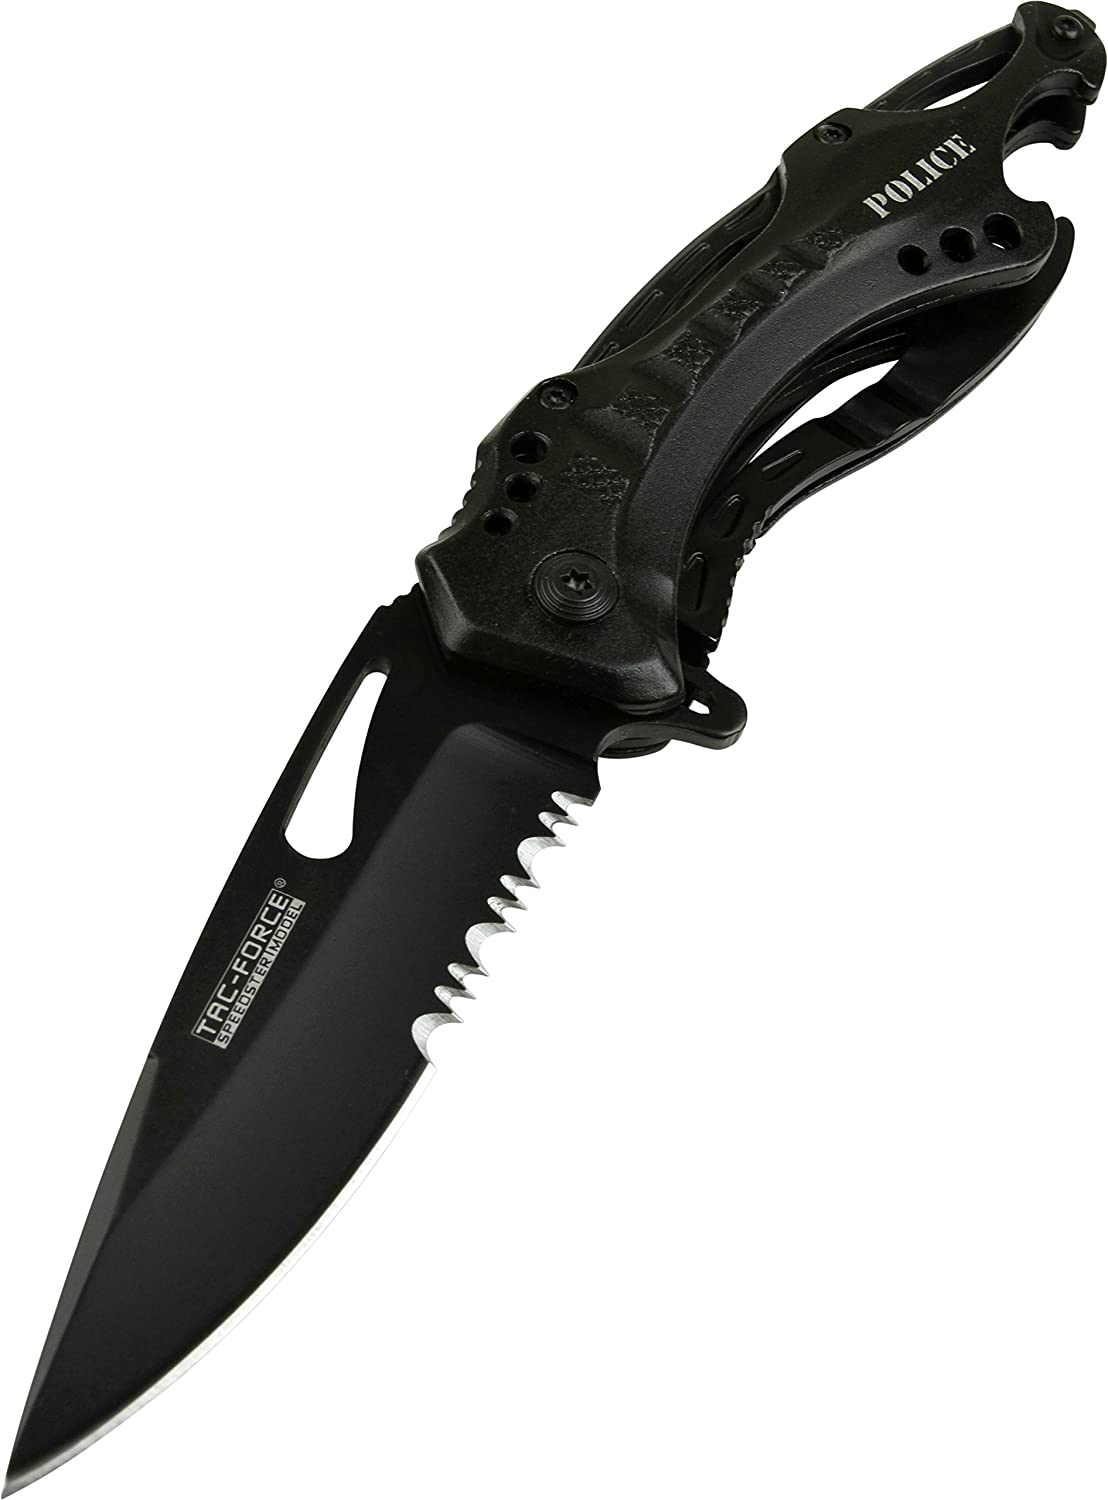 https://eu-lrh.com/wp-content/uploads/2020/10/TAC-Force-TF-705BK-Tactical-Spring-Assisted-Knife.jpg